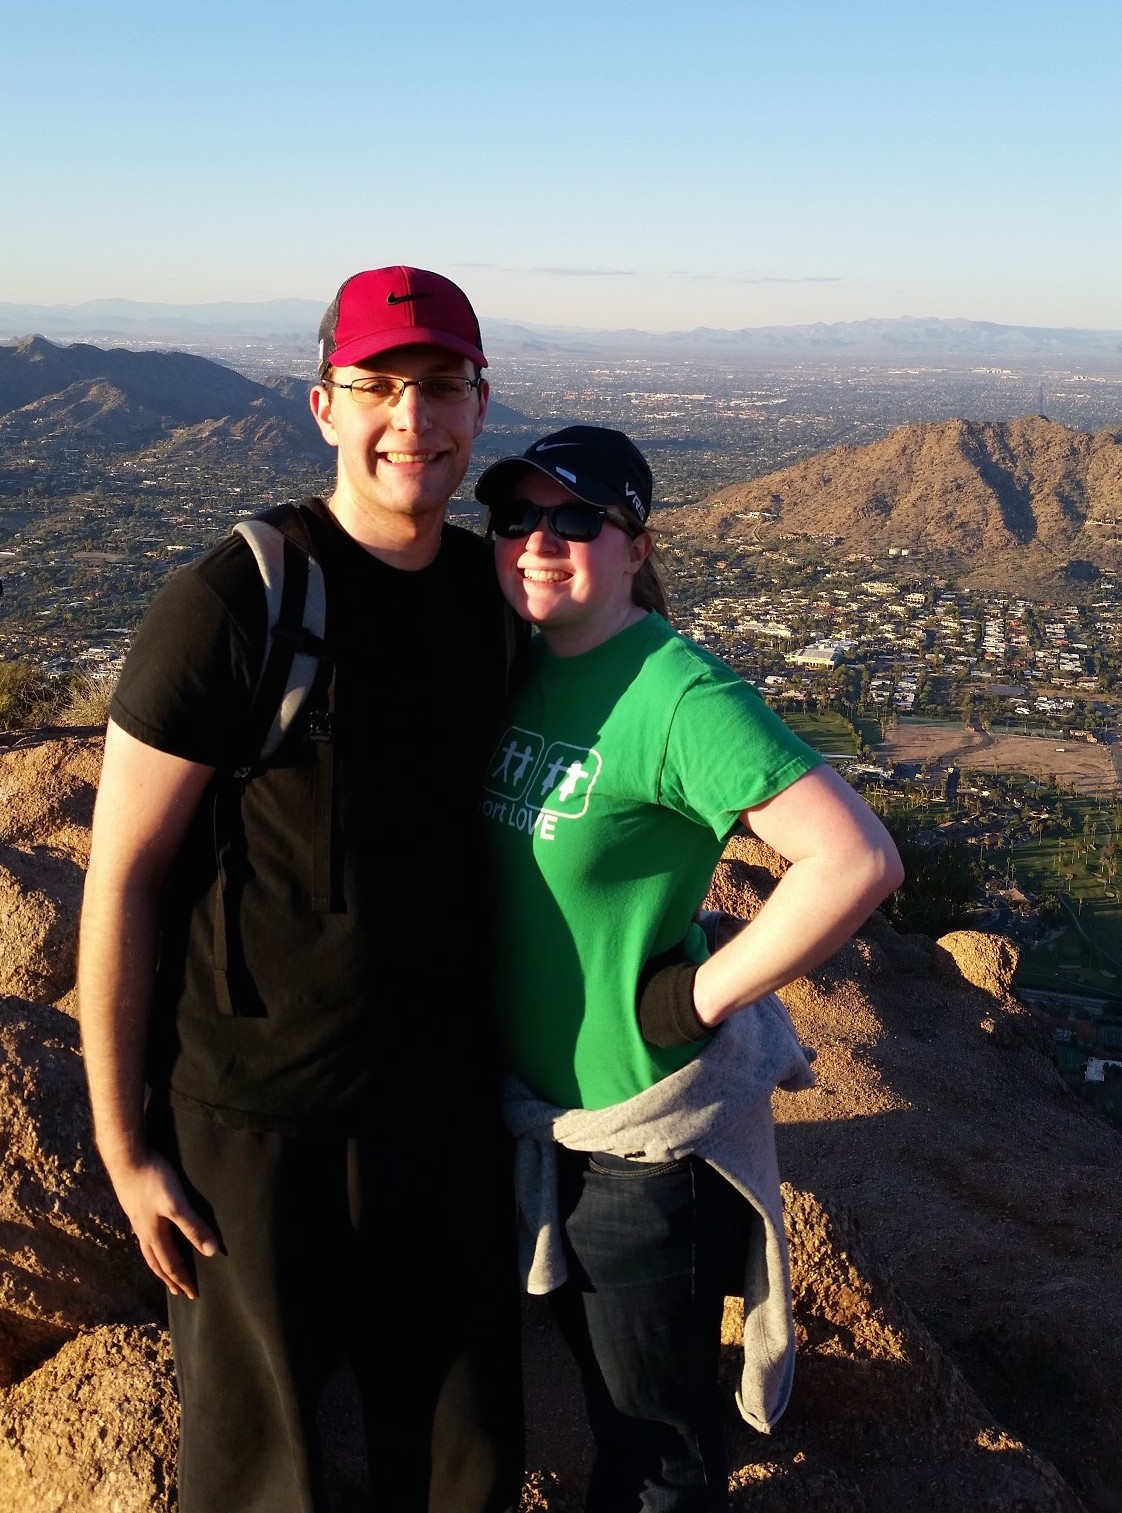 Eli and his girlfriend Megan on top of Camelback Mountain in Arizona